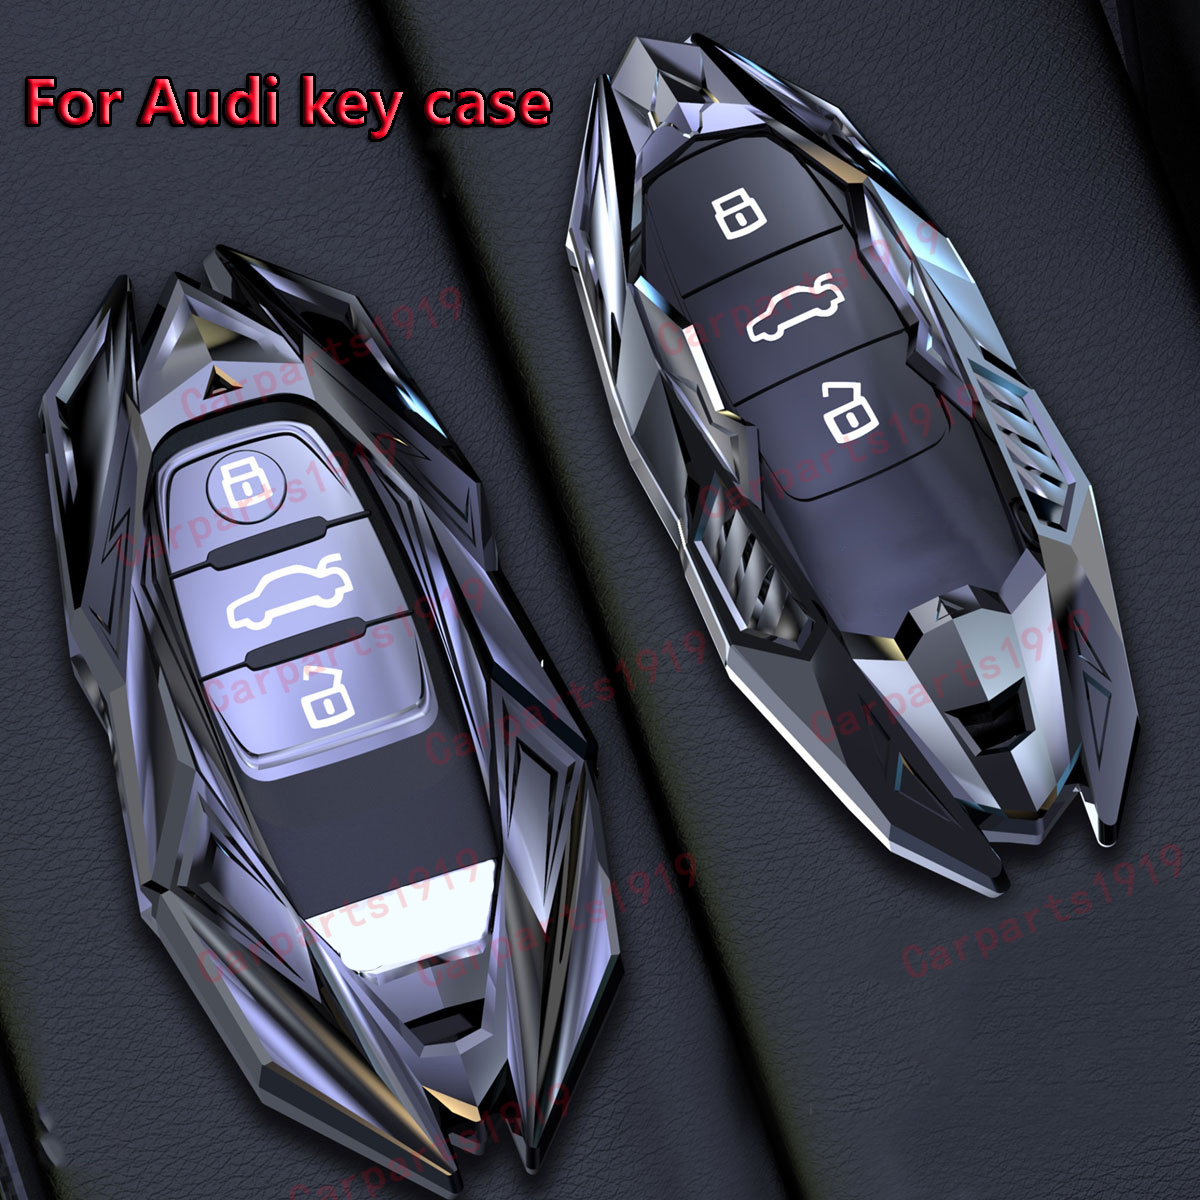 

Car Key Case Cover shell fob For Audi A1 A3 Q2L Q3 S3 S5 S6 R8 TT TTS 2020 Q7 Q5 A6 A4 A4L Q5L A5 A6L A7 A8 Q8 S4 S8 accessories, Sky blue